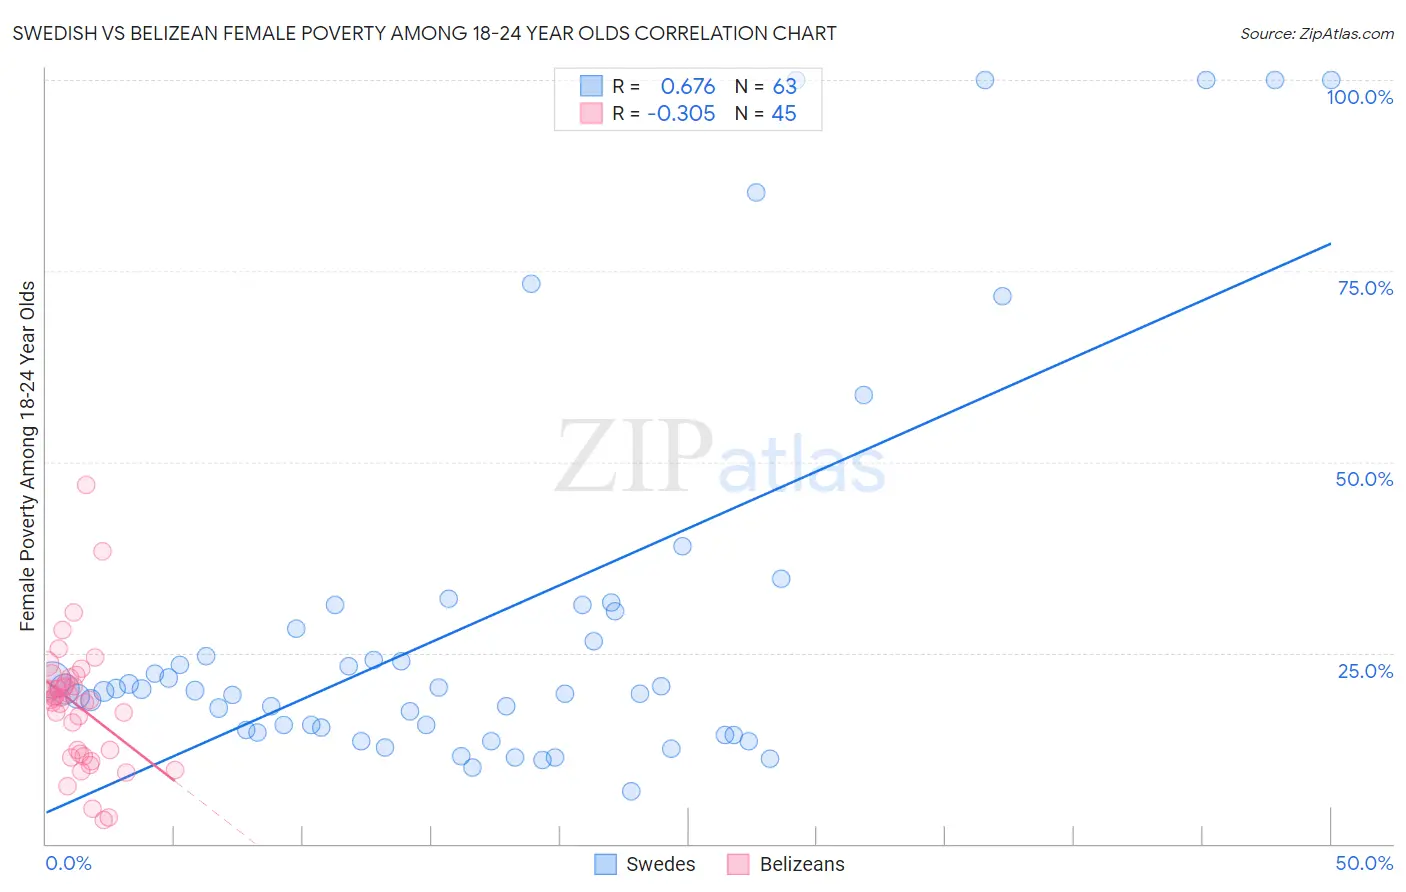 Swedish vs Belizean Female Poverty Among 18-24 Year Olds